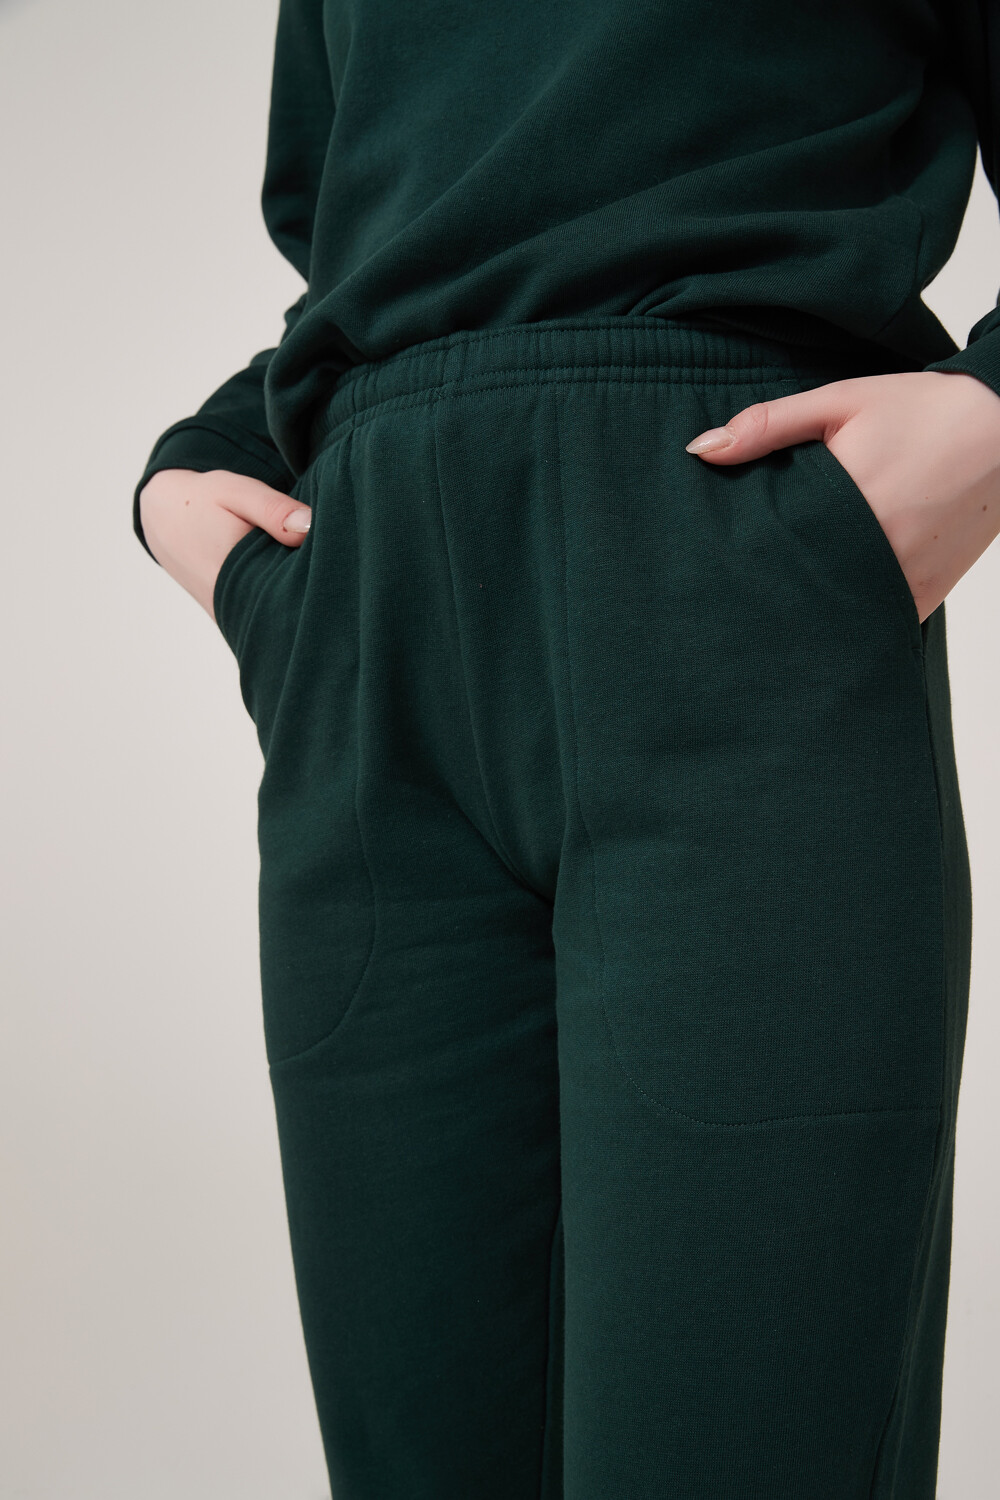 Pantalon Mixtinv Verde Ingles